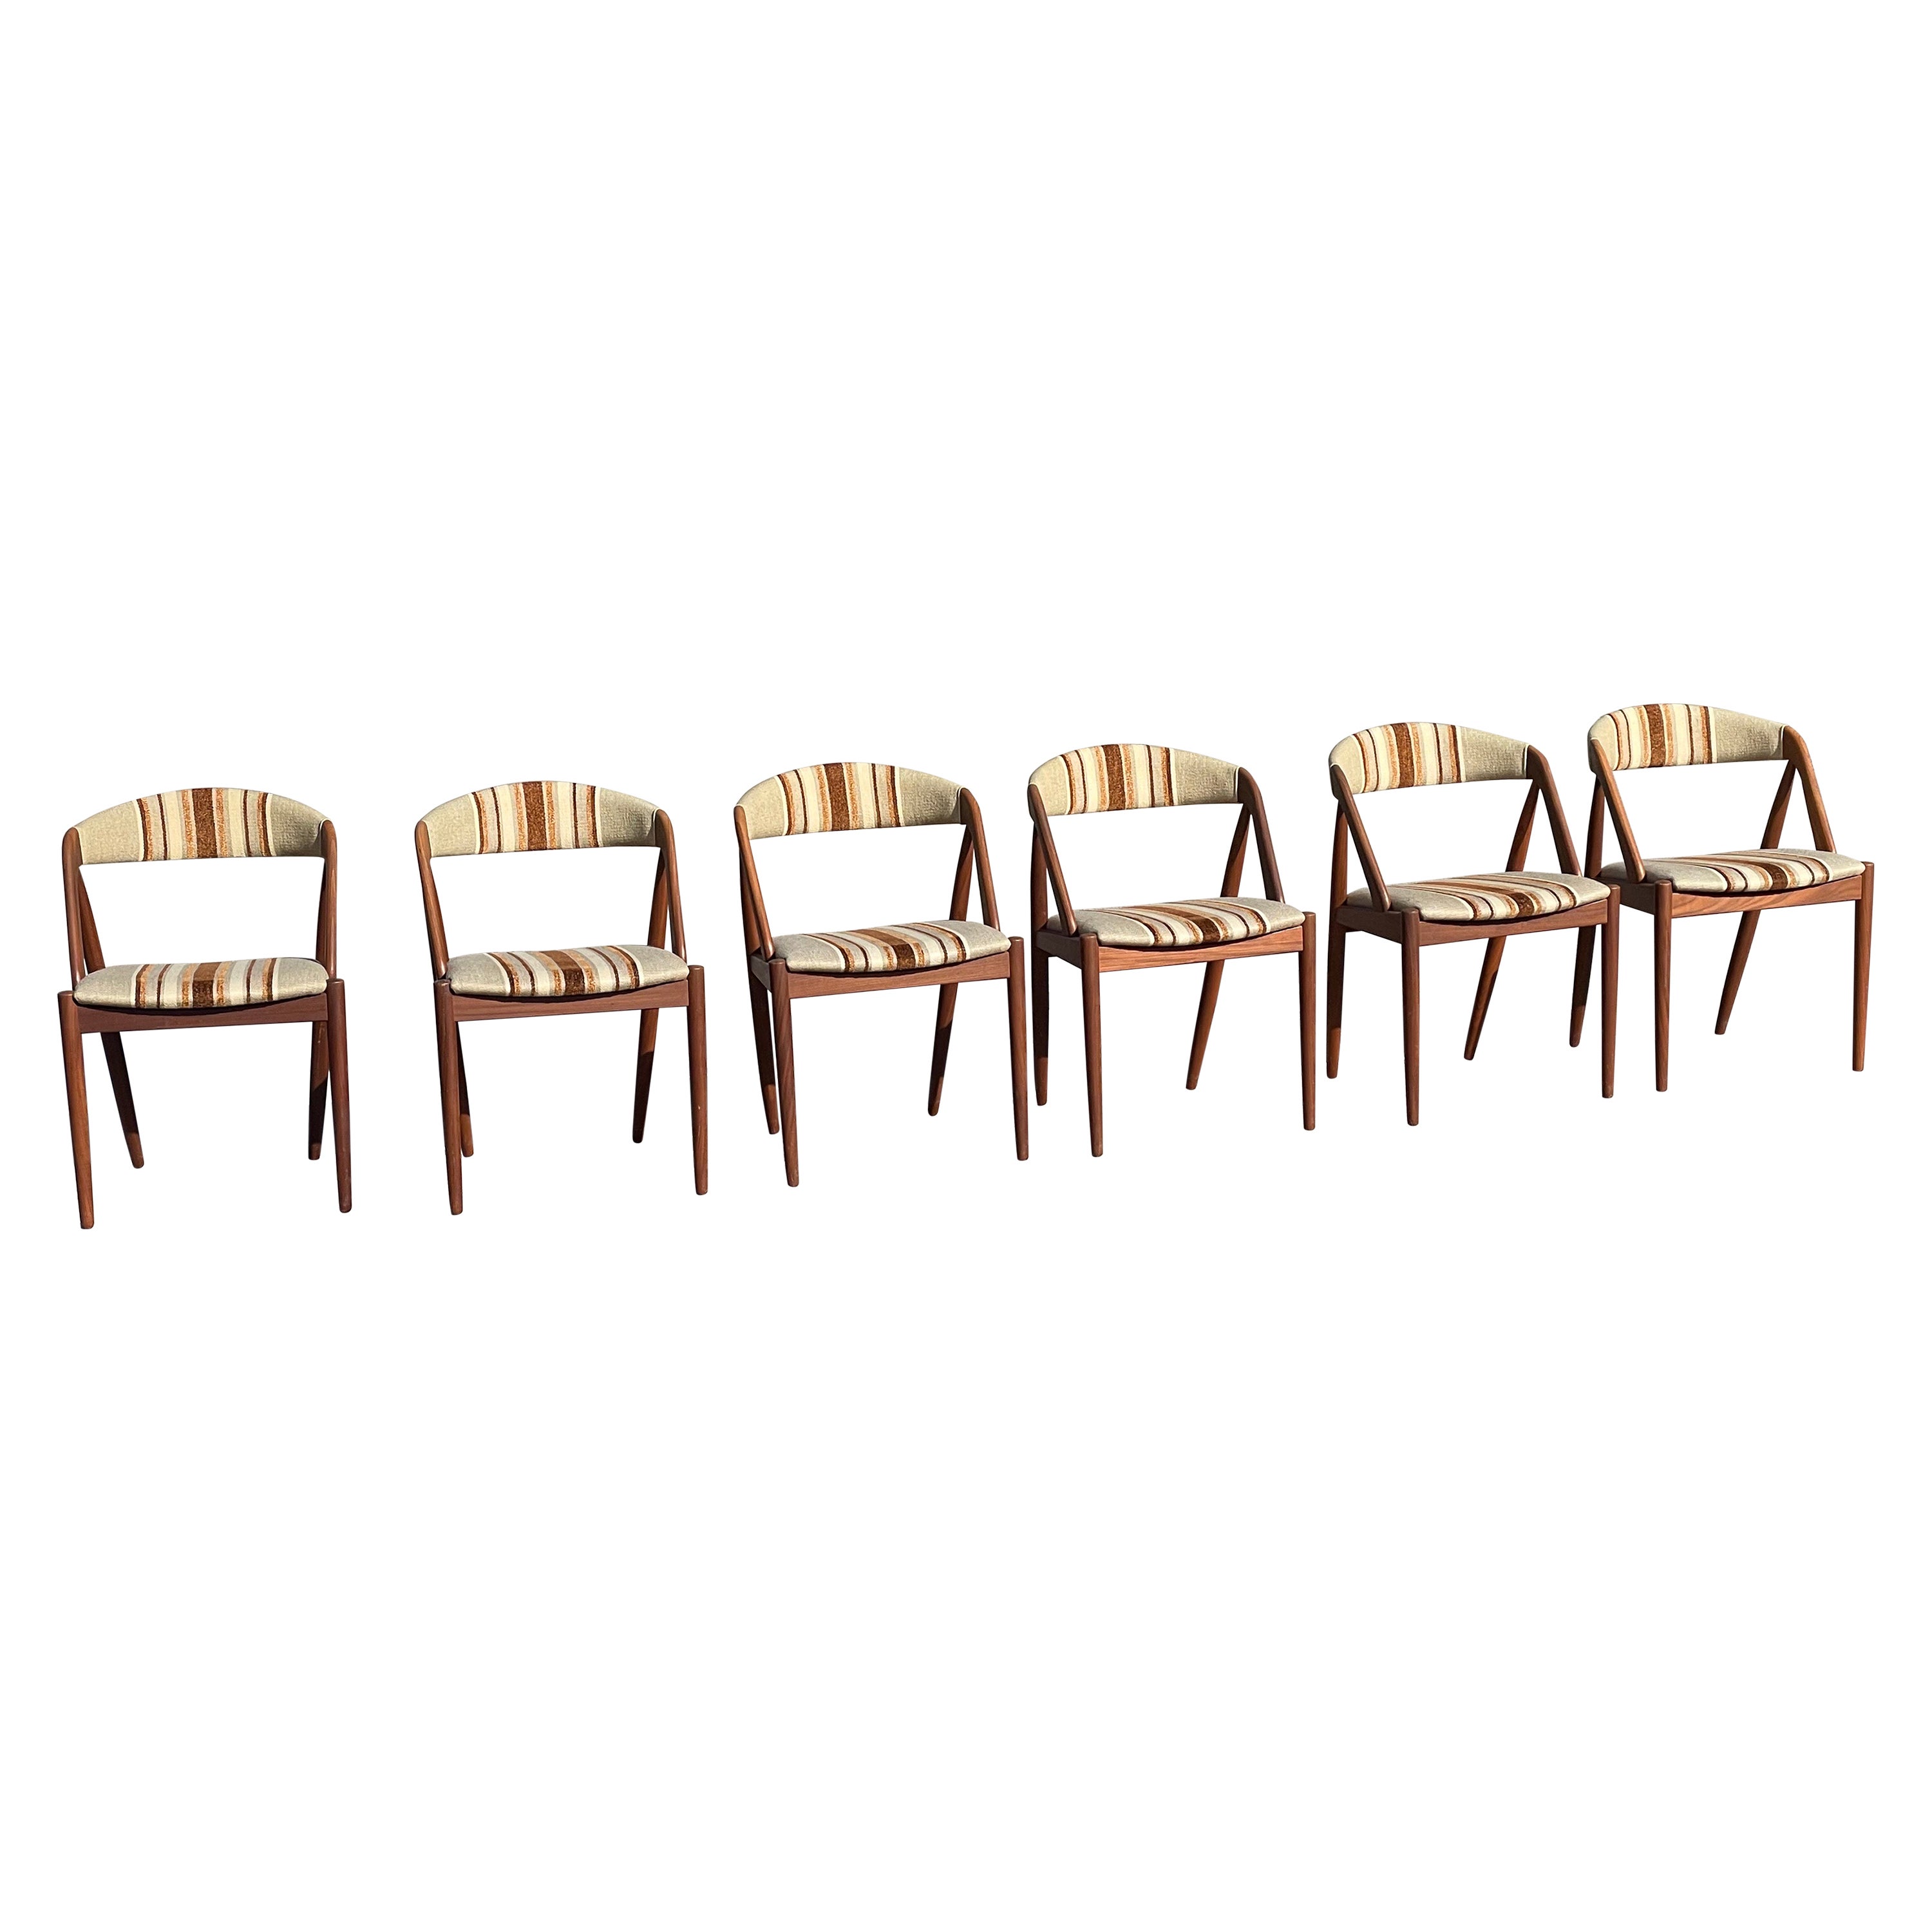 6 Original Kai Kristiansen Teak Dinning Chairs from 1960s